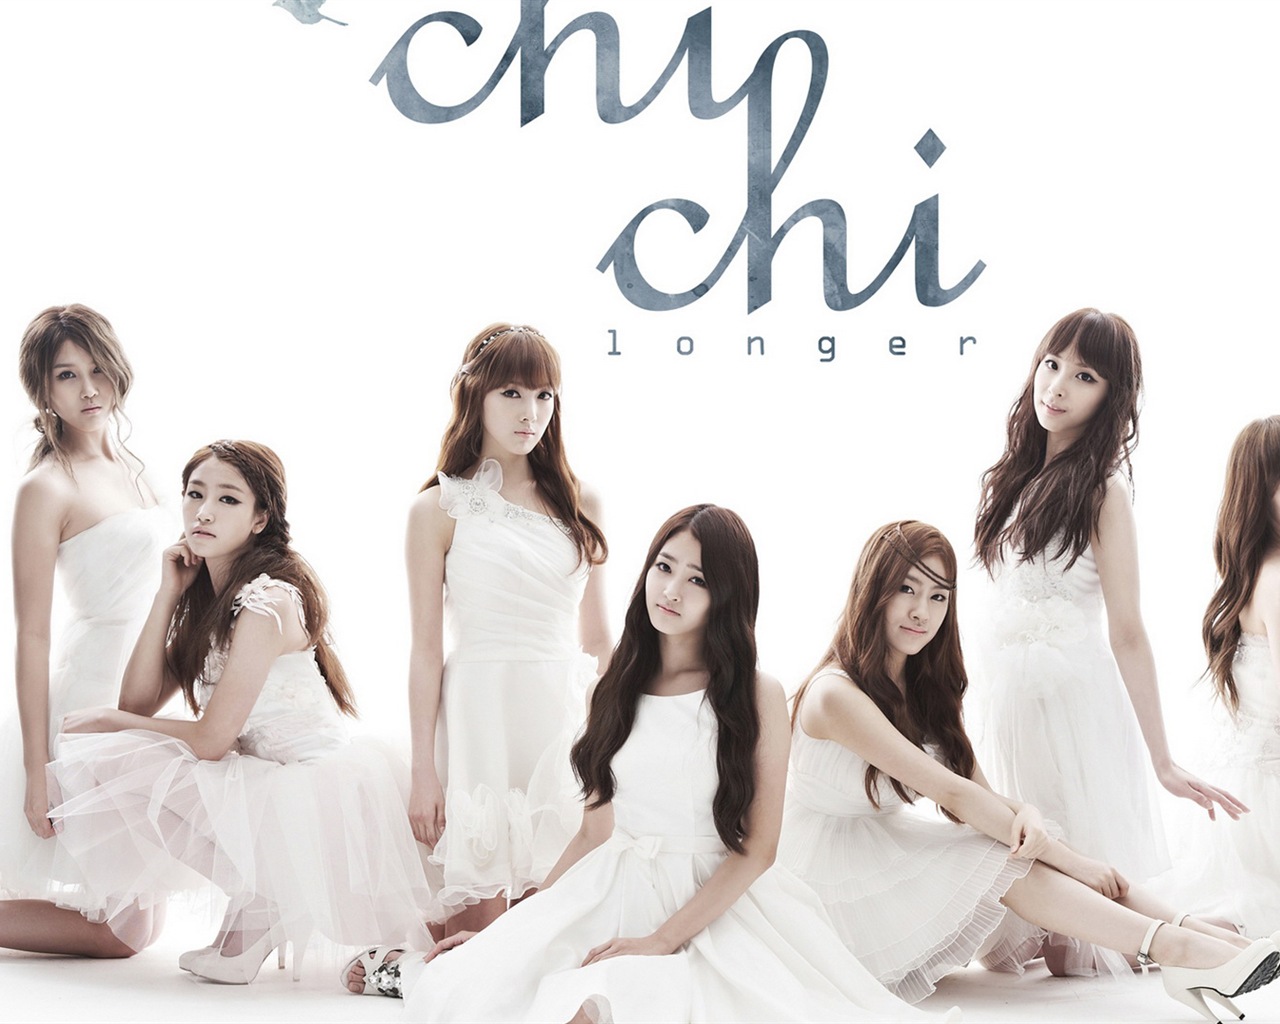 CHI CHI koreanische Musik Girlgroup HD Wallpapers #1 - 1280x1024